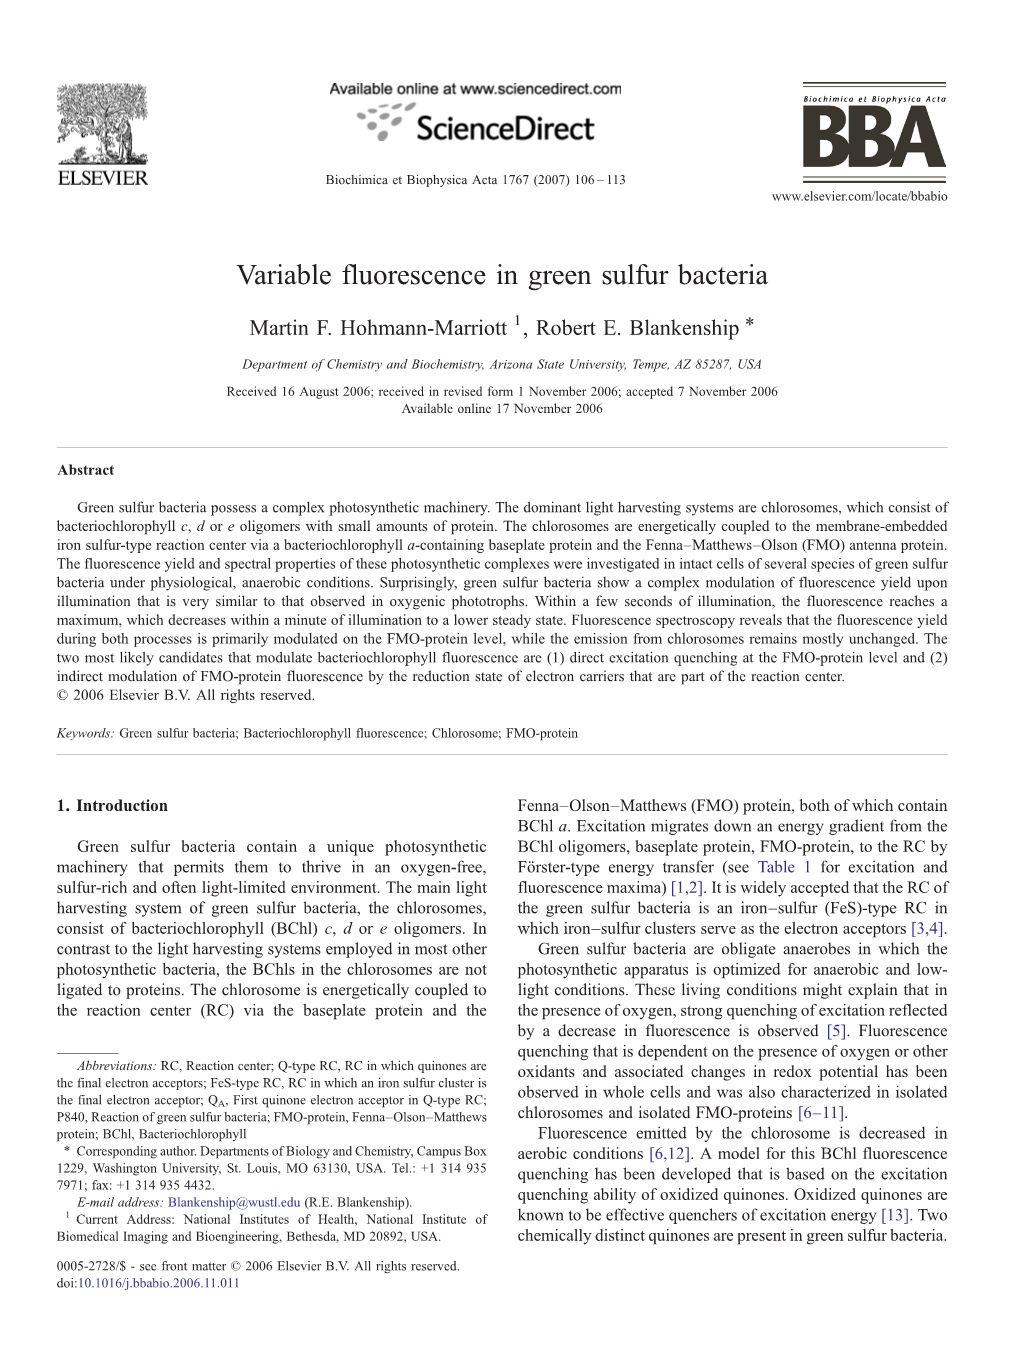 Variable Fluorescence in Green Sulfur Bacteria ⁎ Martin F